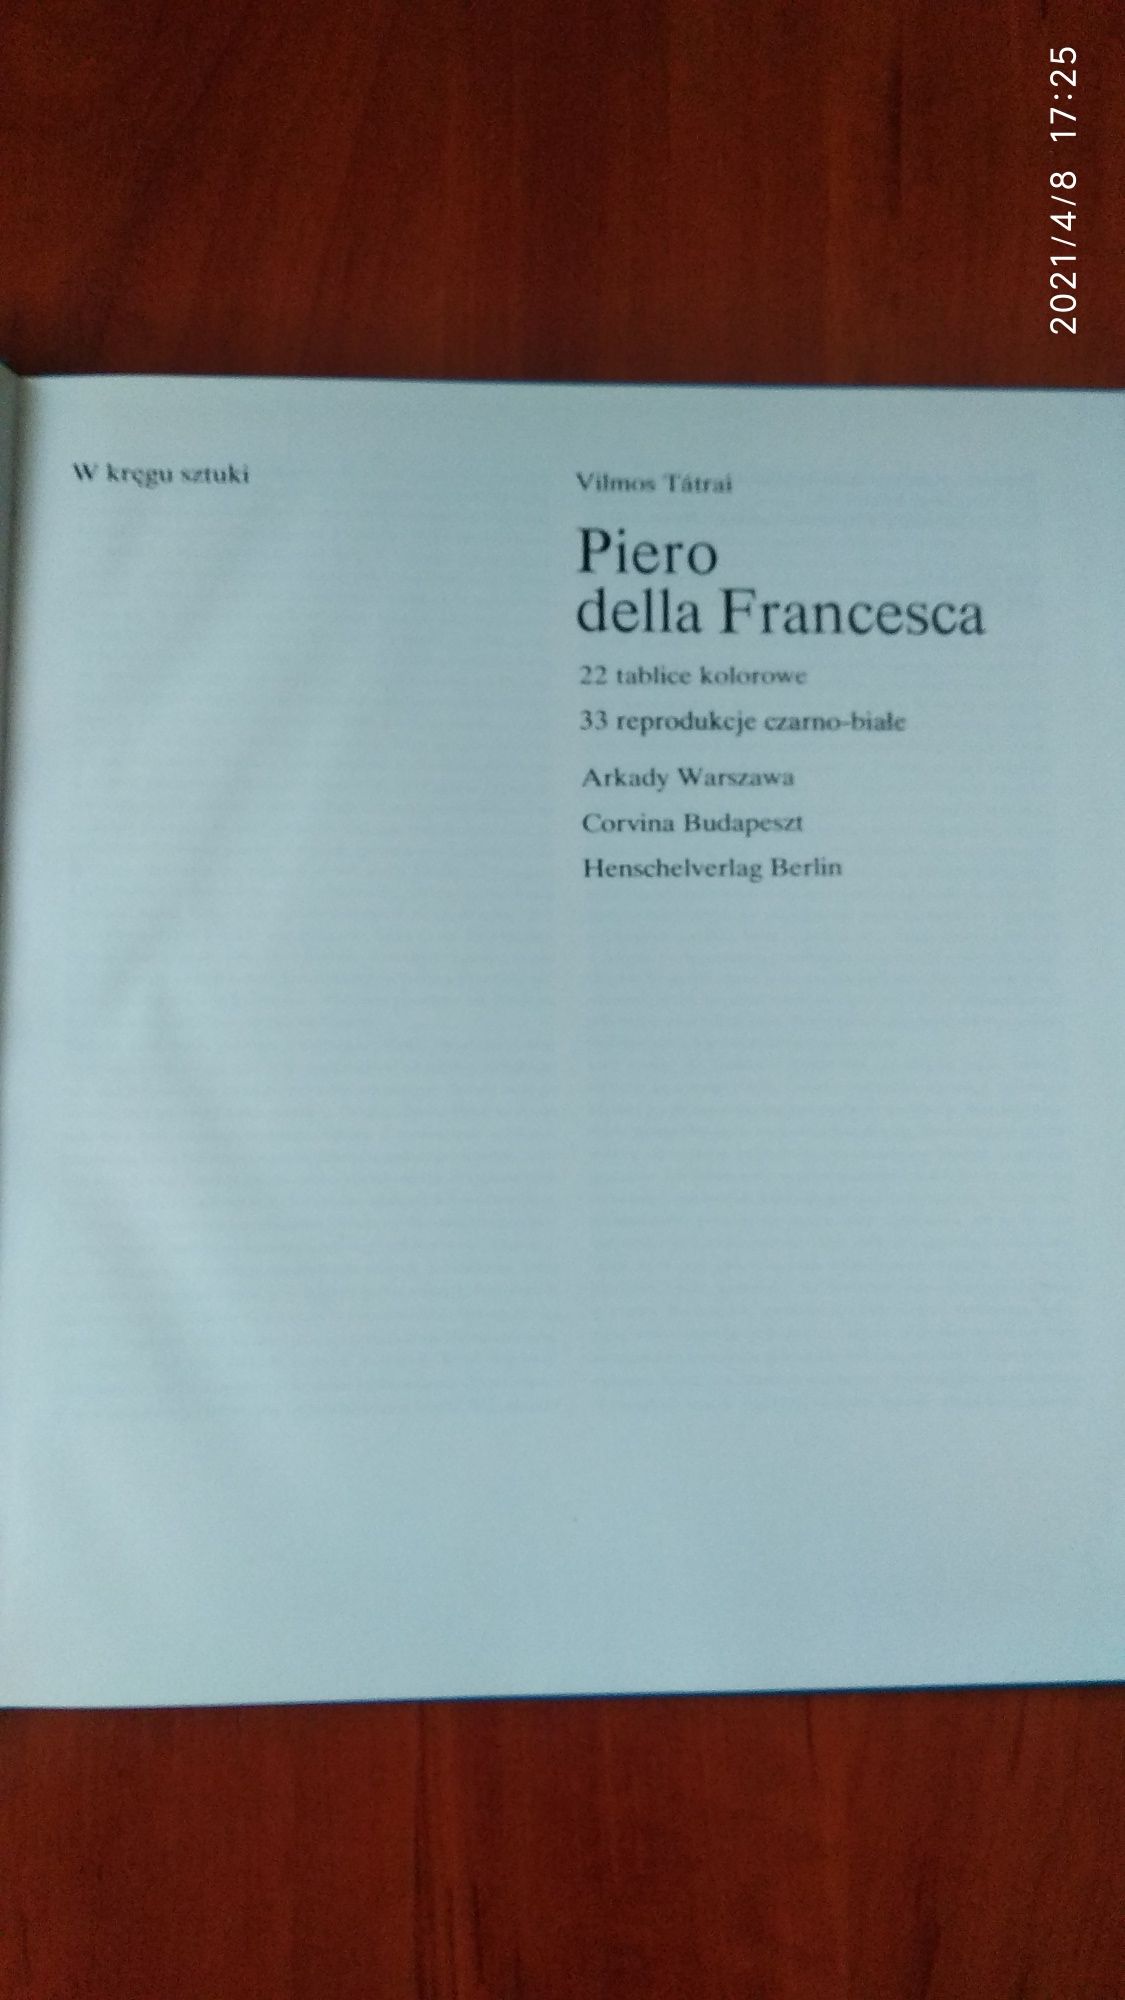 Справочник альбом Piero della Francesca